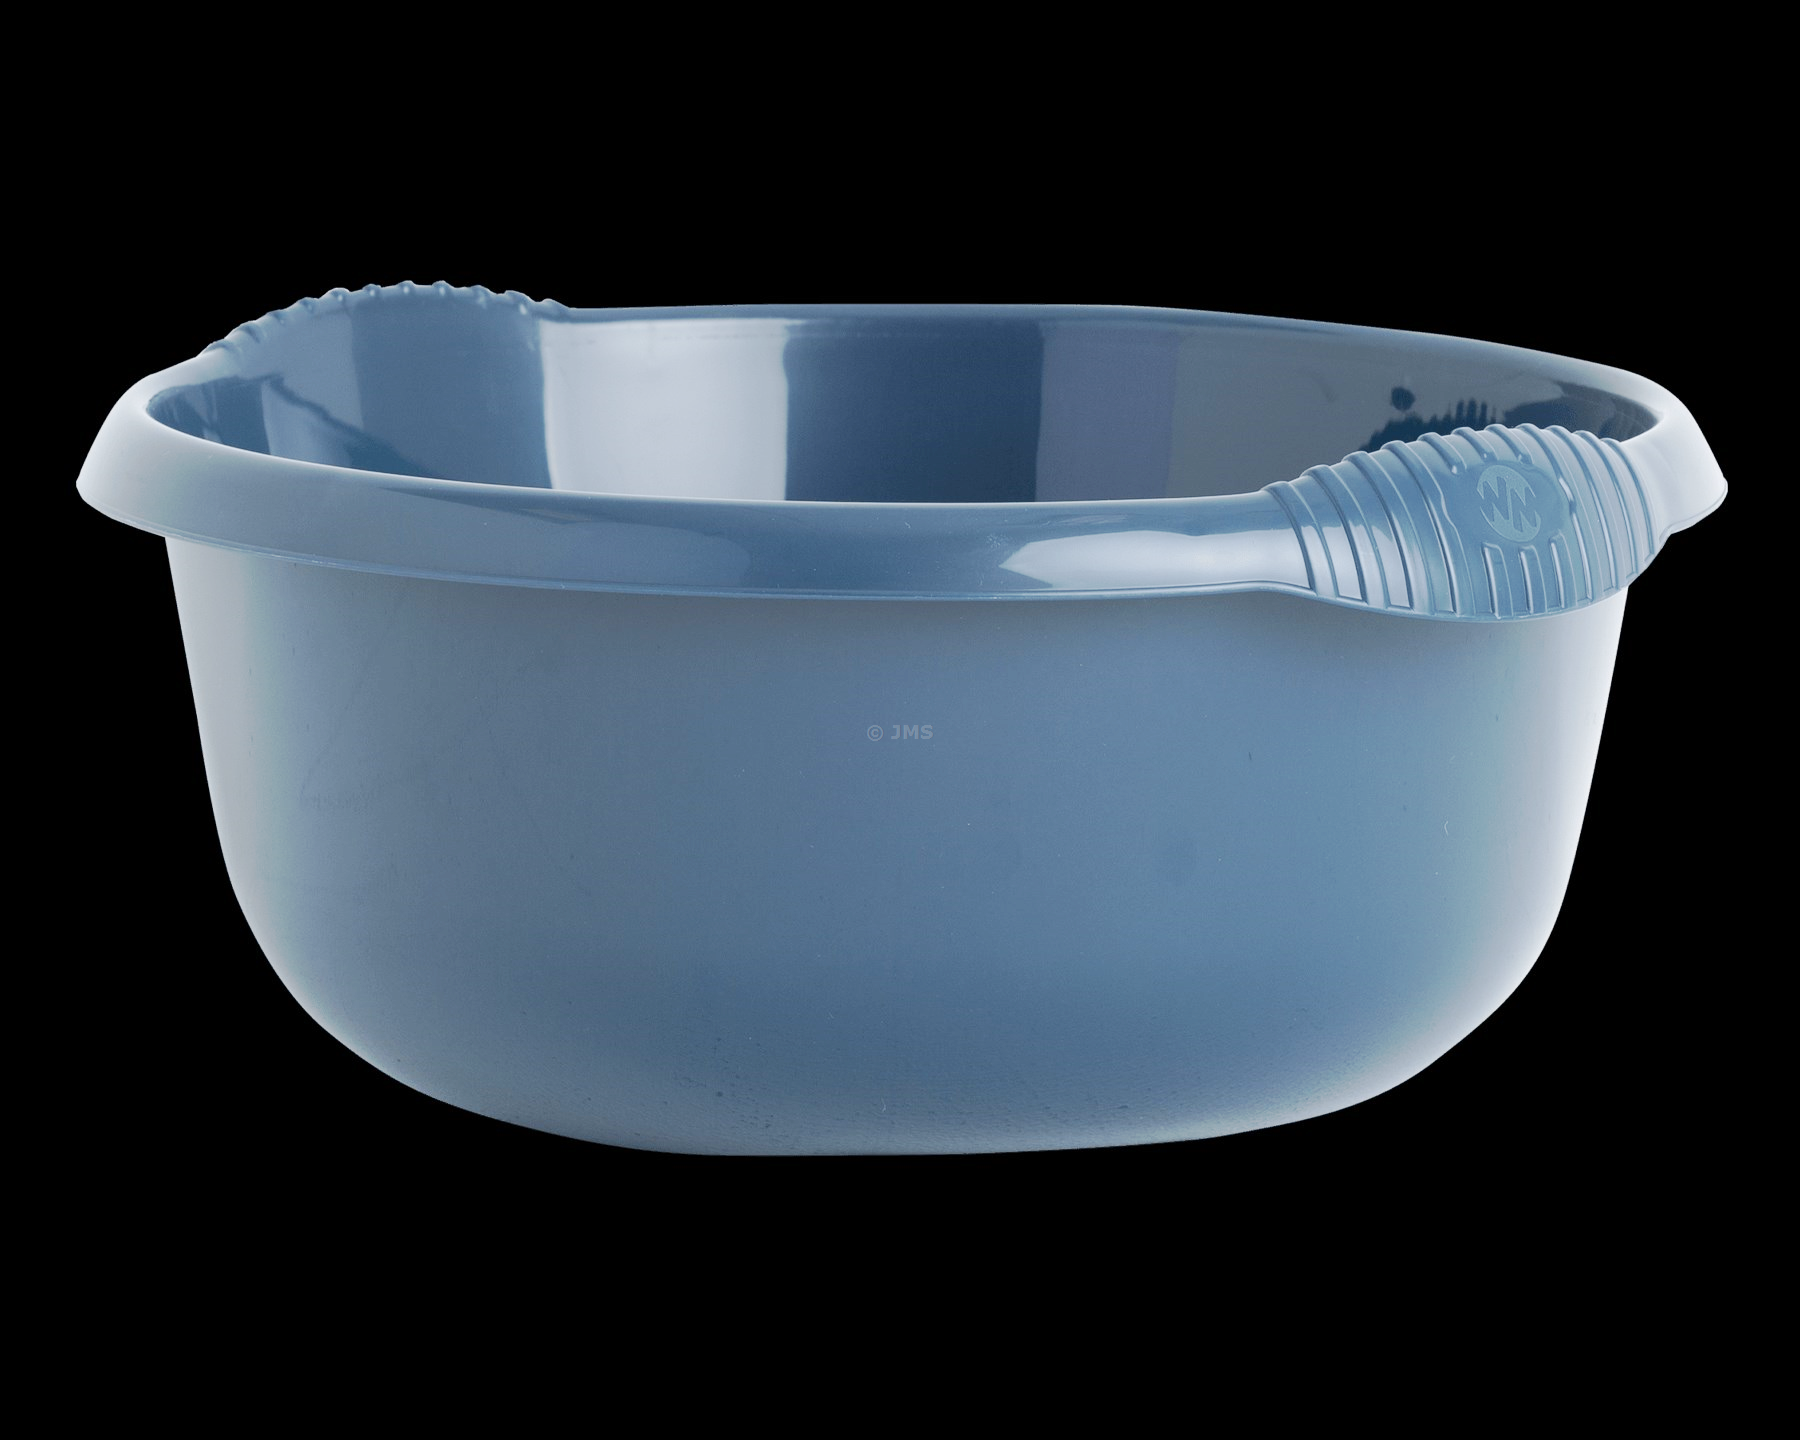 Casa 36cm Washing Up Round Bowl Navy 10L Capacity Integral Handles Home Kitchen Sink Basin Wash Tub